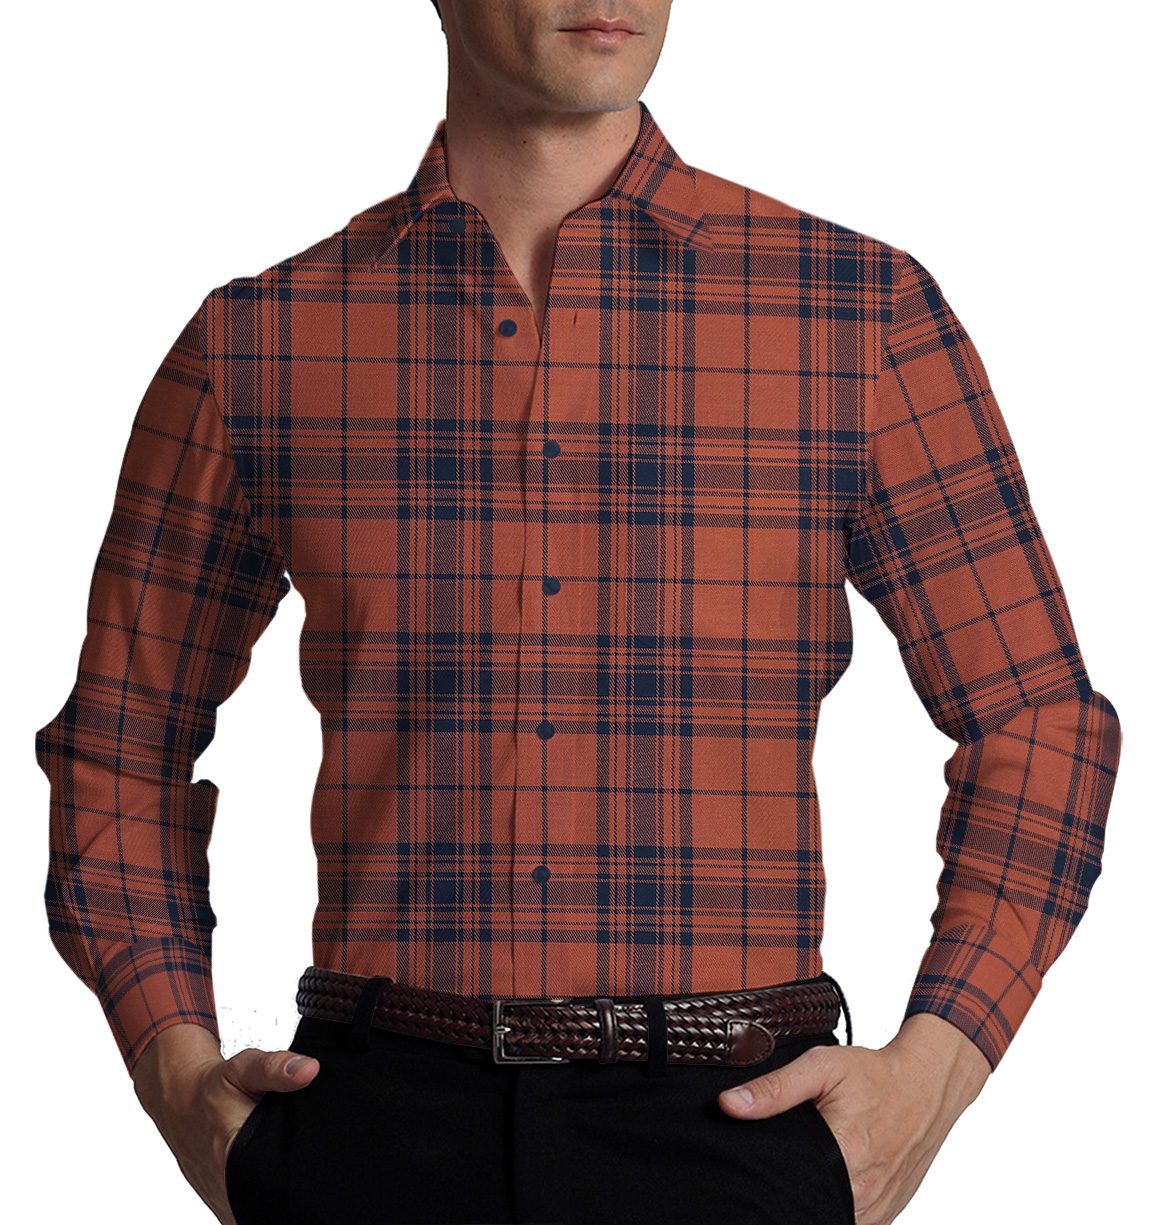 Monza Men's Brick Red 100% Superfine Cotton Broad Blue Checks Shirt Fabric (1.60 M)